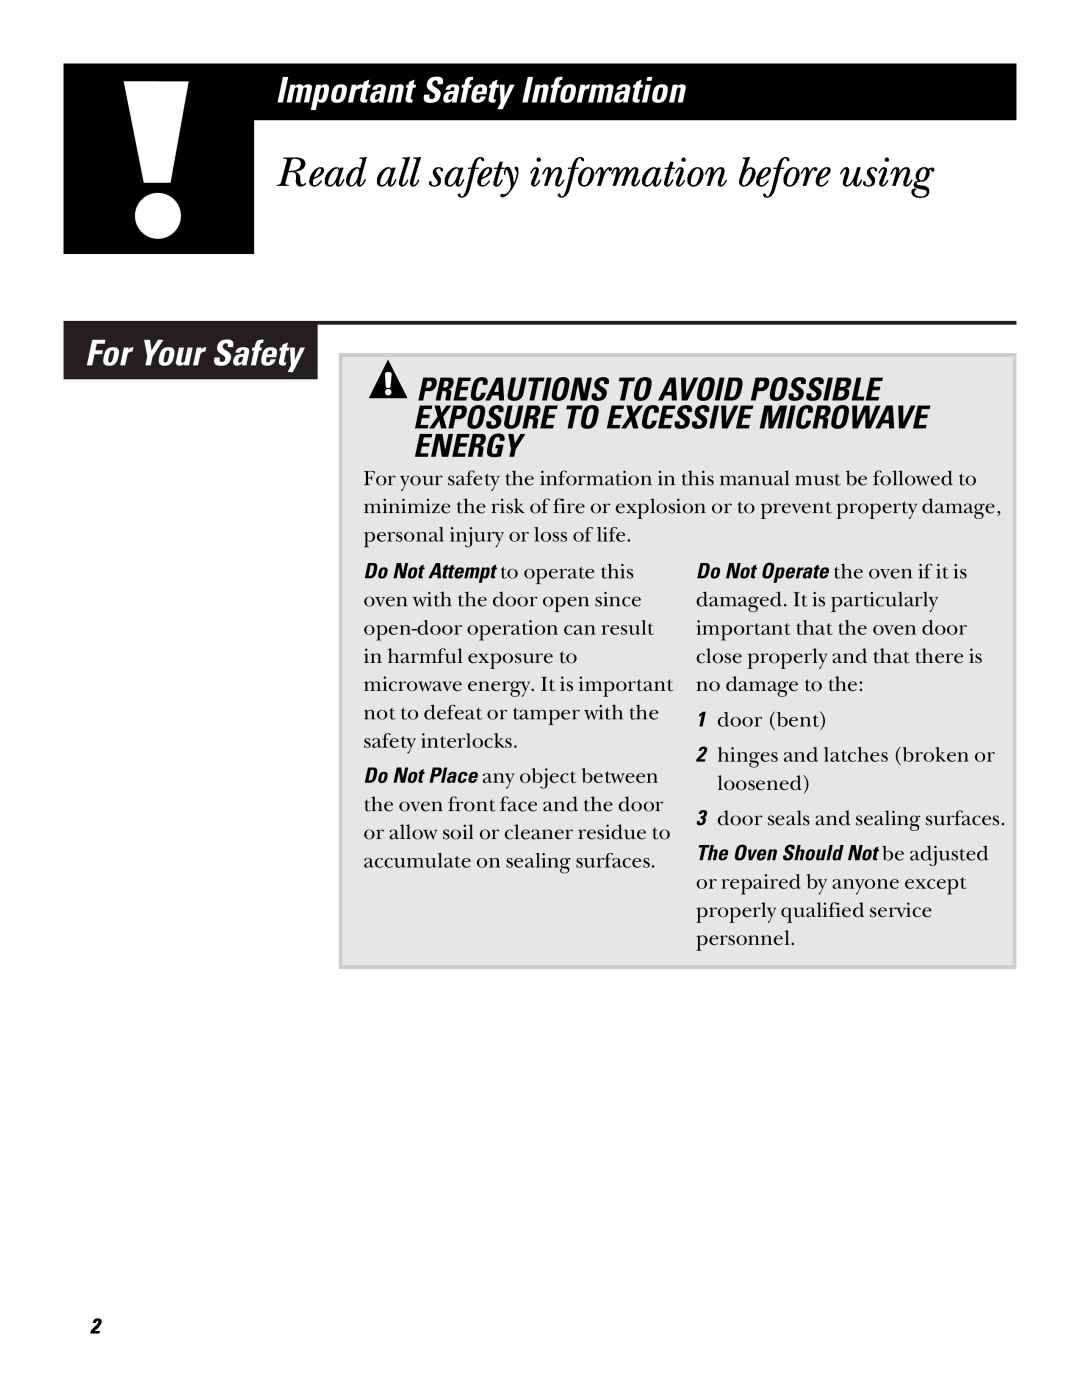 GE JE835, JE1235 Read all safety information before using, Important Safety Information, For Your Safety 